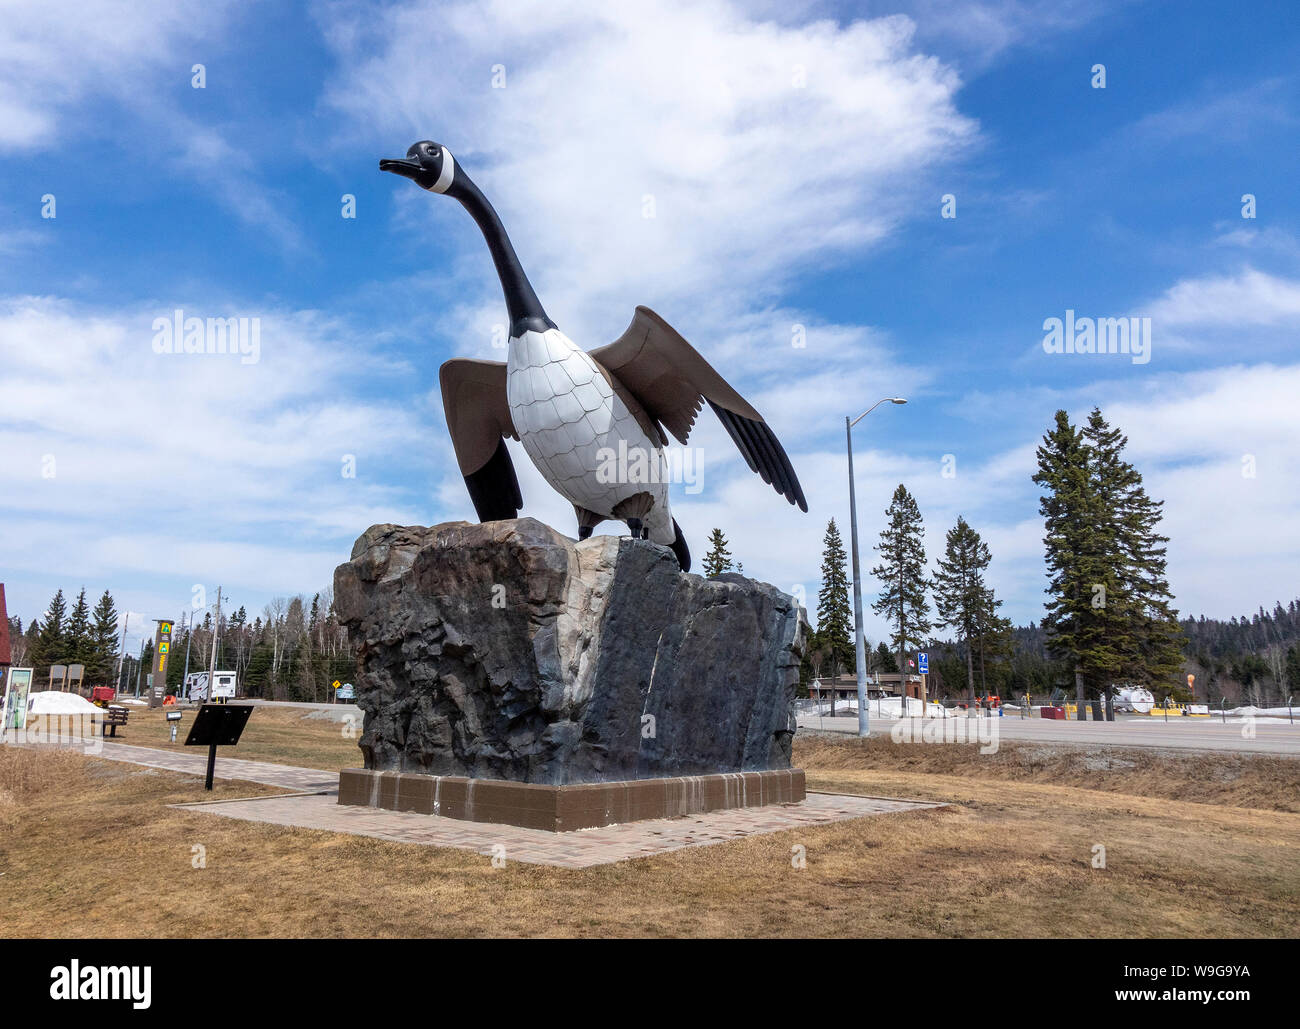 The Giant Canada Goose Statue In Wawa Ontario Canada Stock Photo